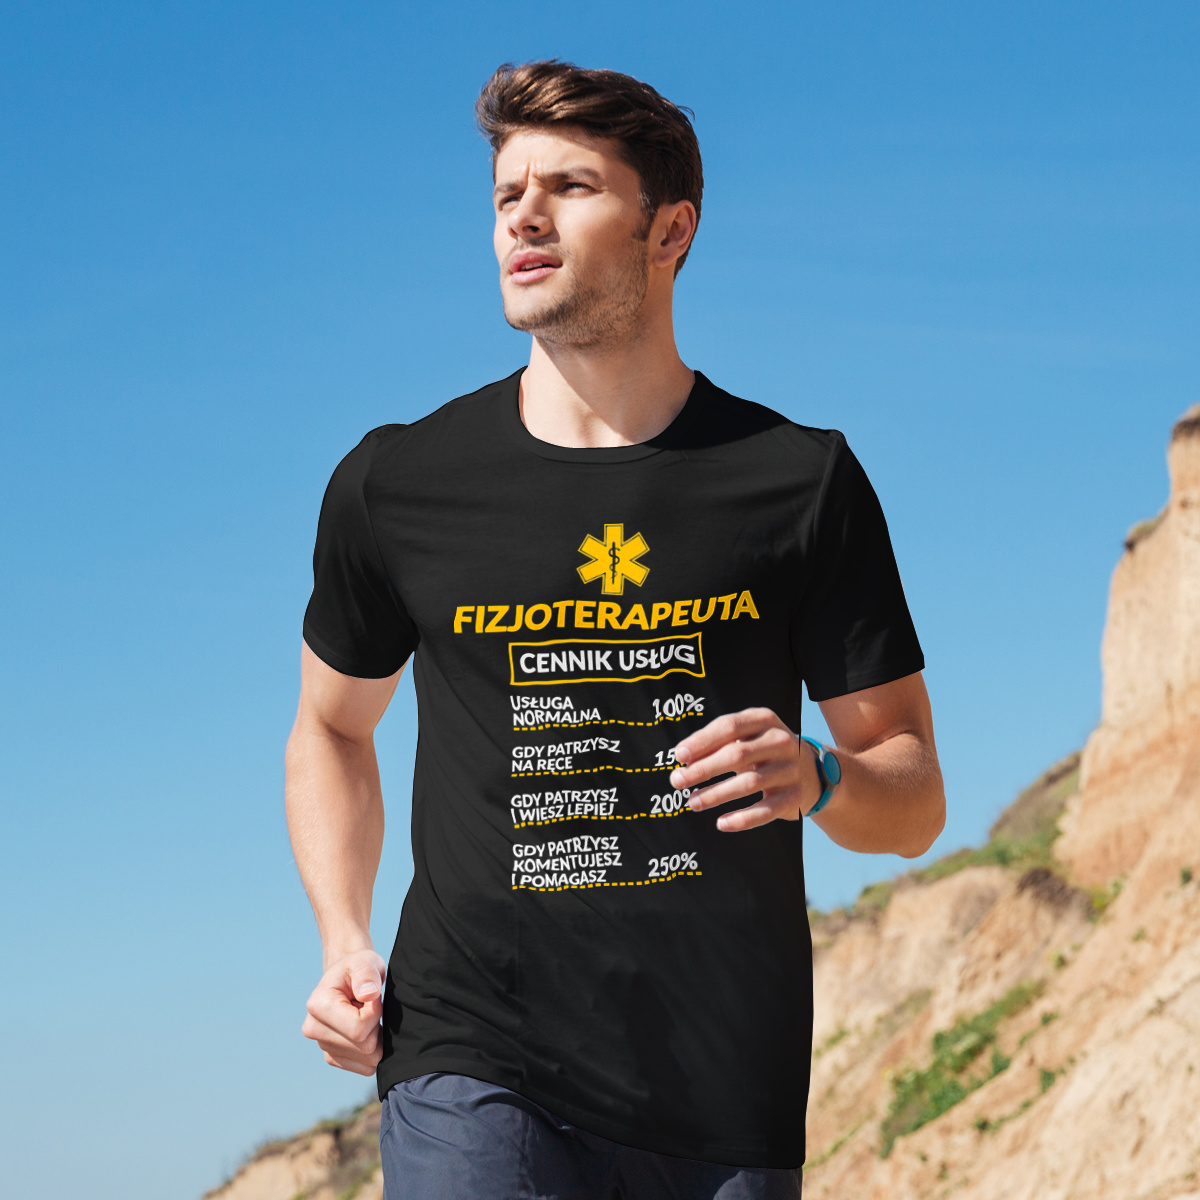 Fizjoterapeuta - Cennik Usług - Męska Koszulka Czarna